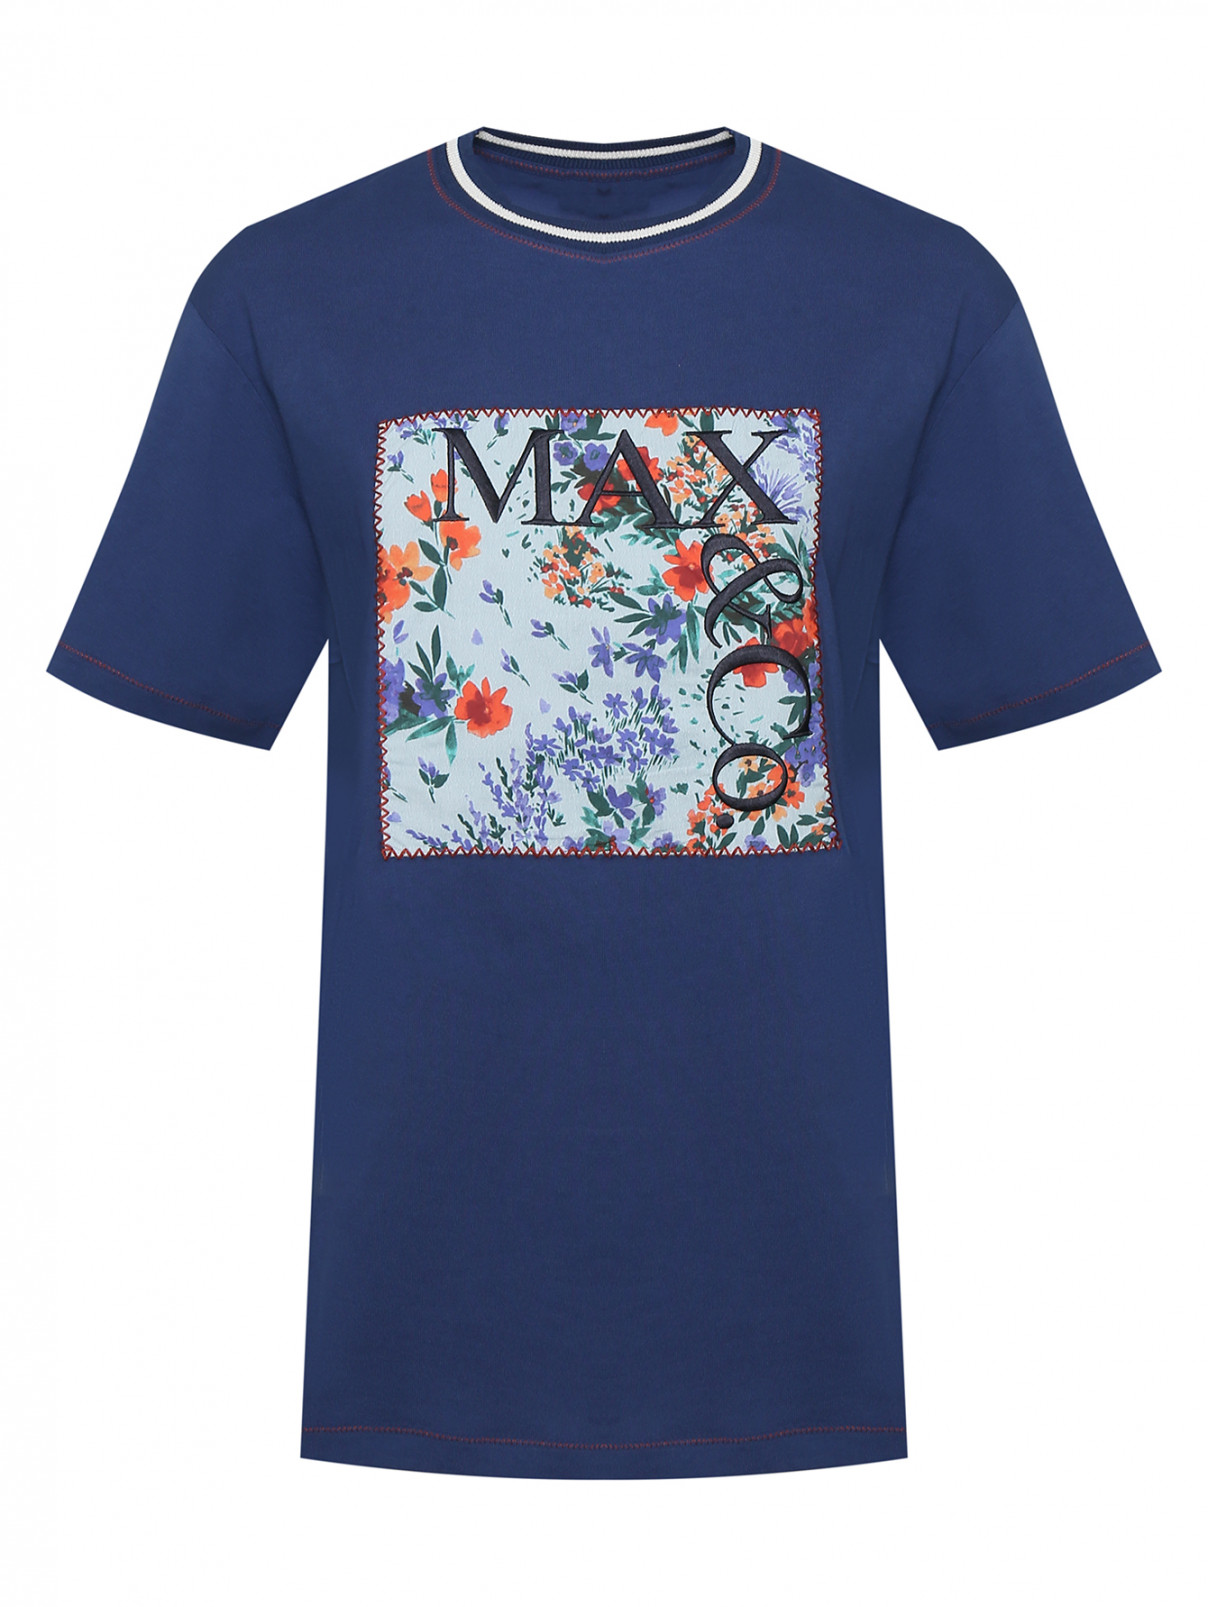 Футболка с вышивкой Max&Co  –  Общий вид  – Цвет:  Синий